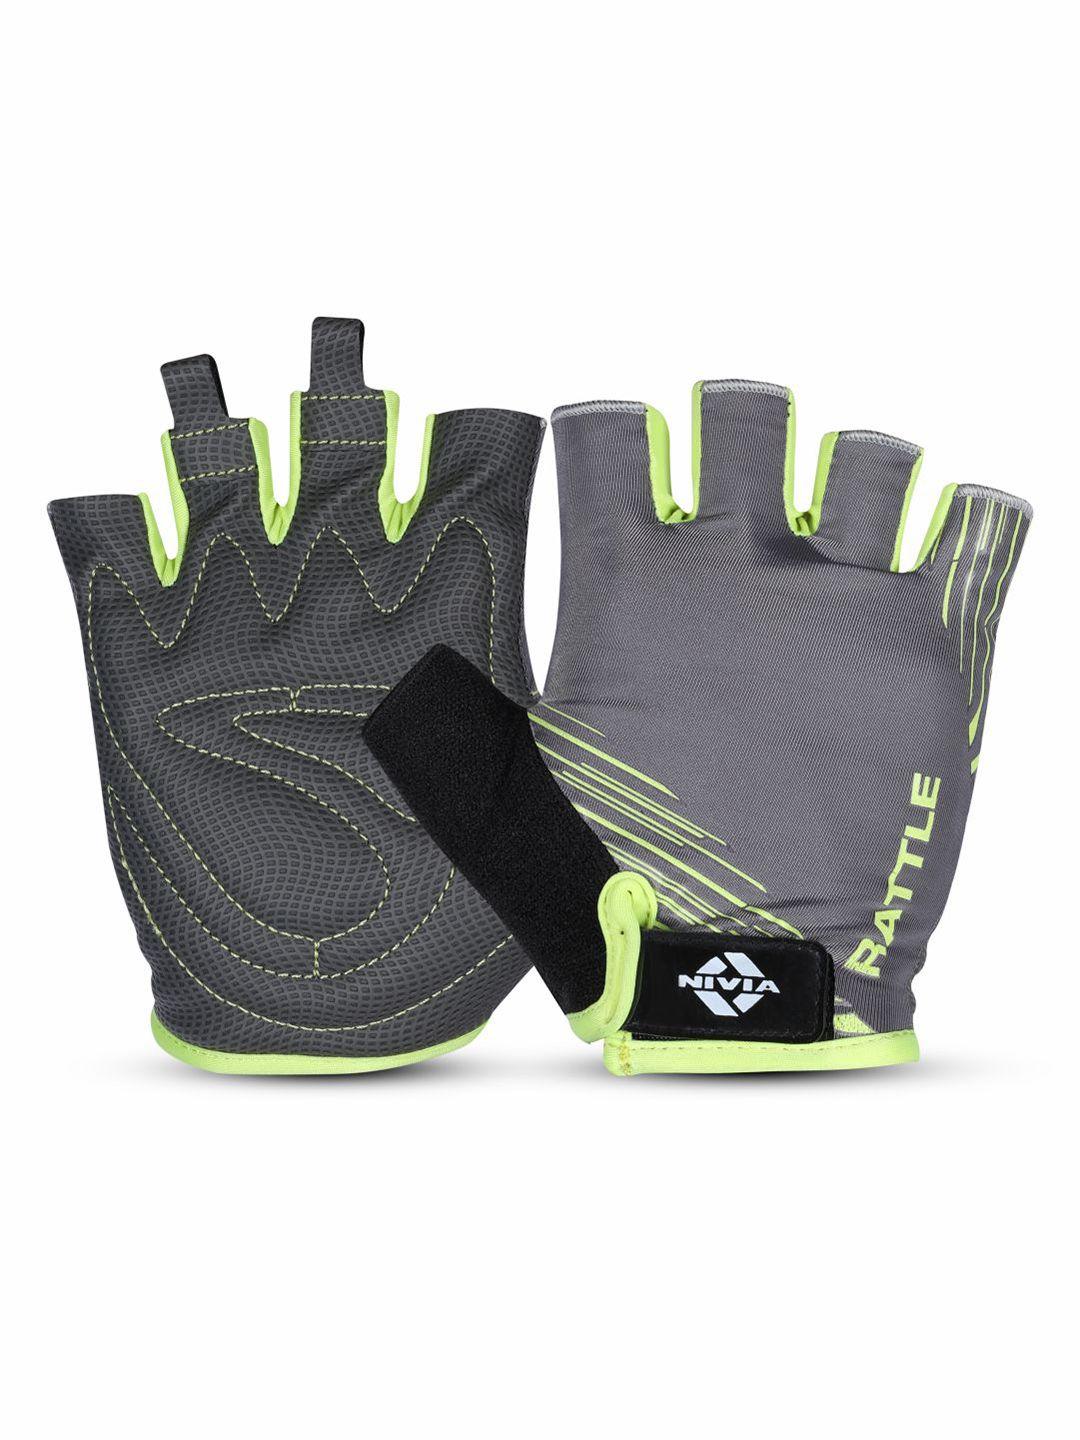 nivia 4-way stretch rattle gym gloves